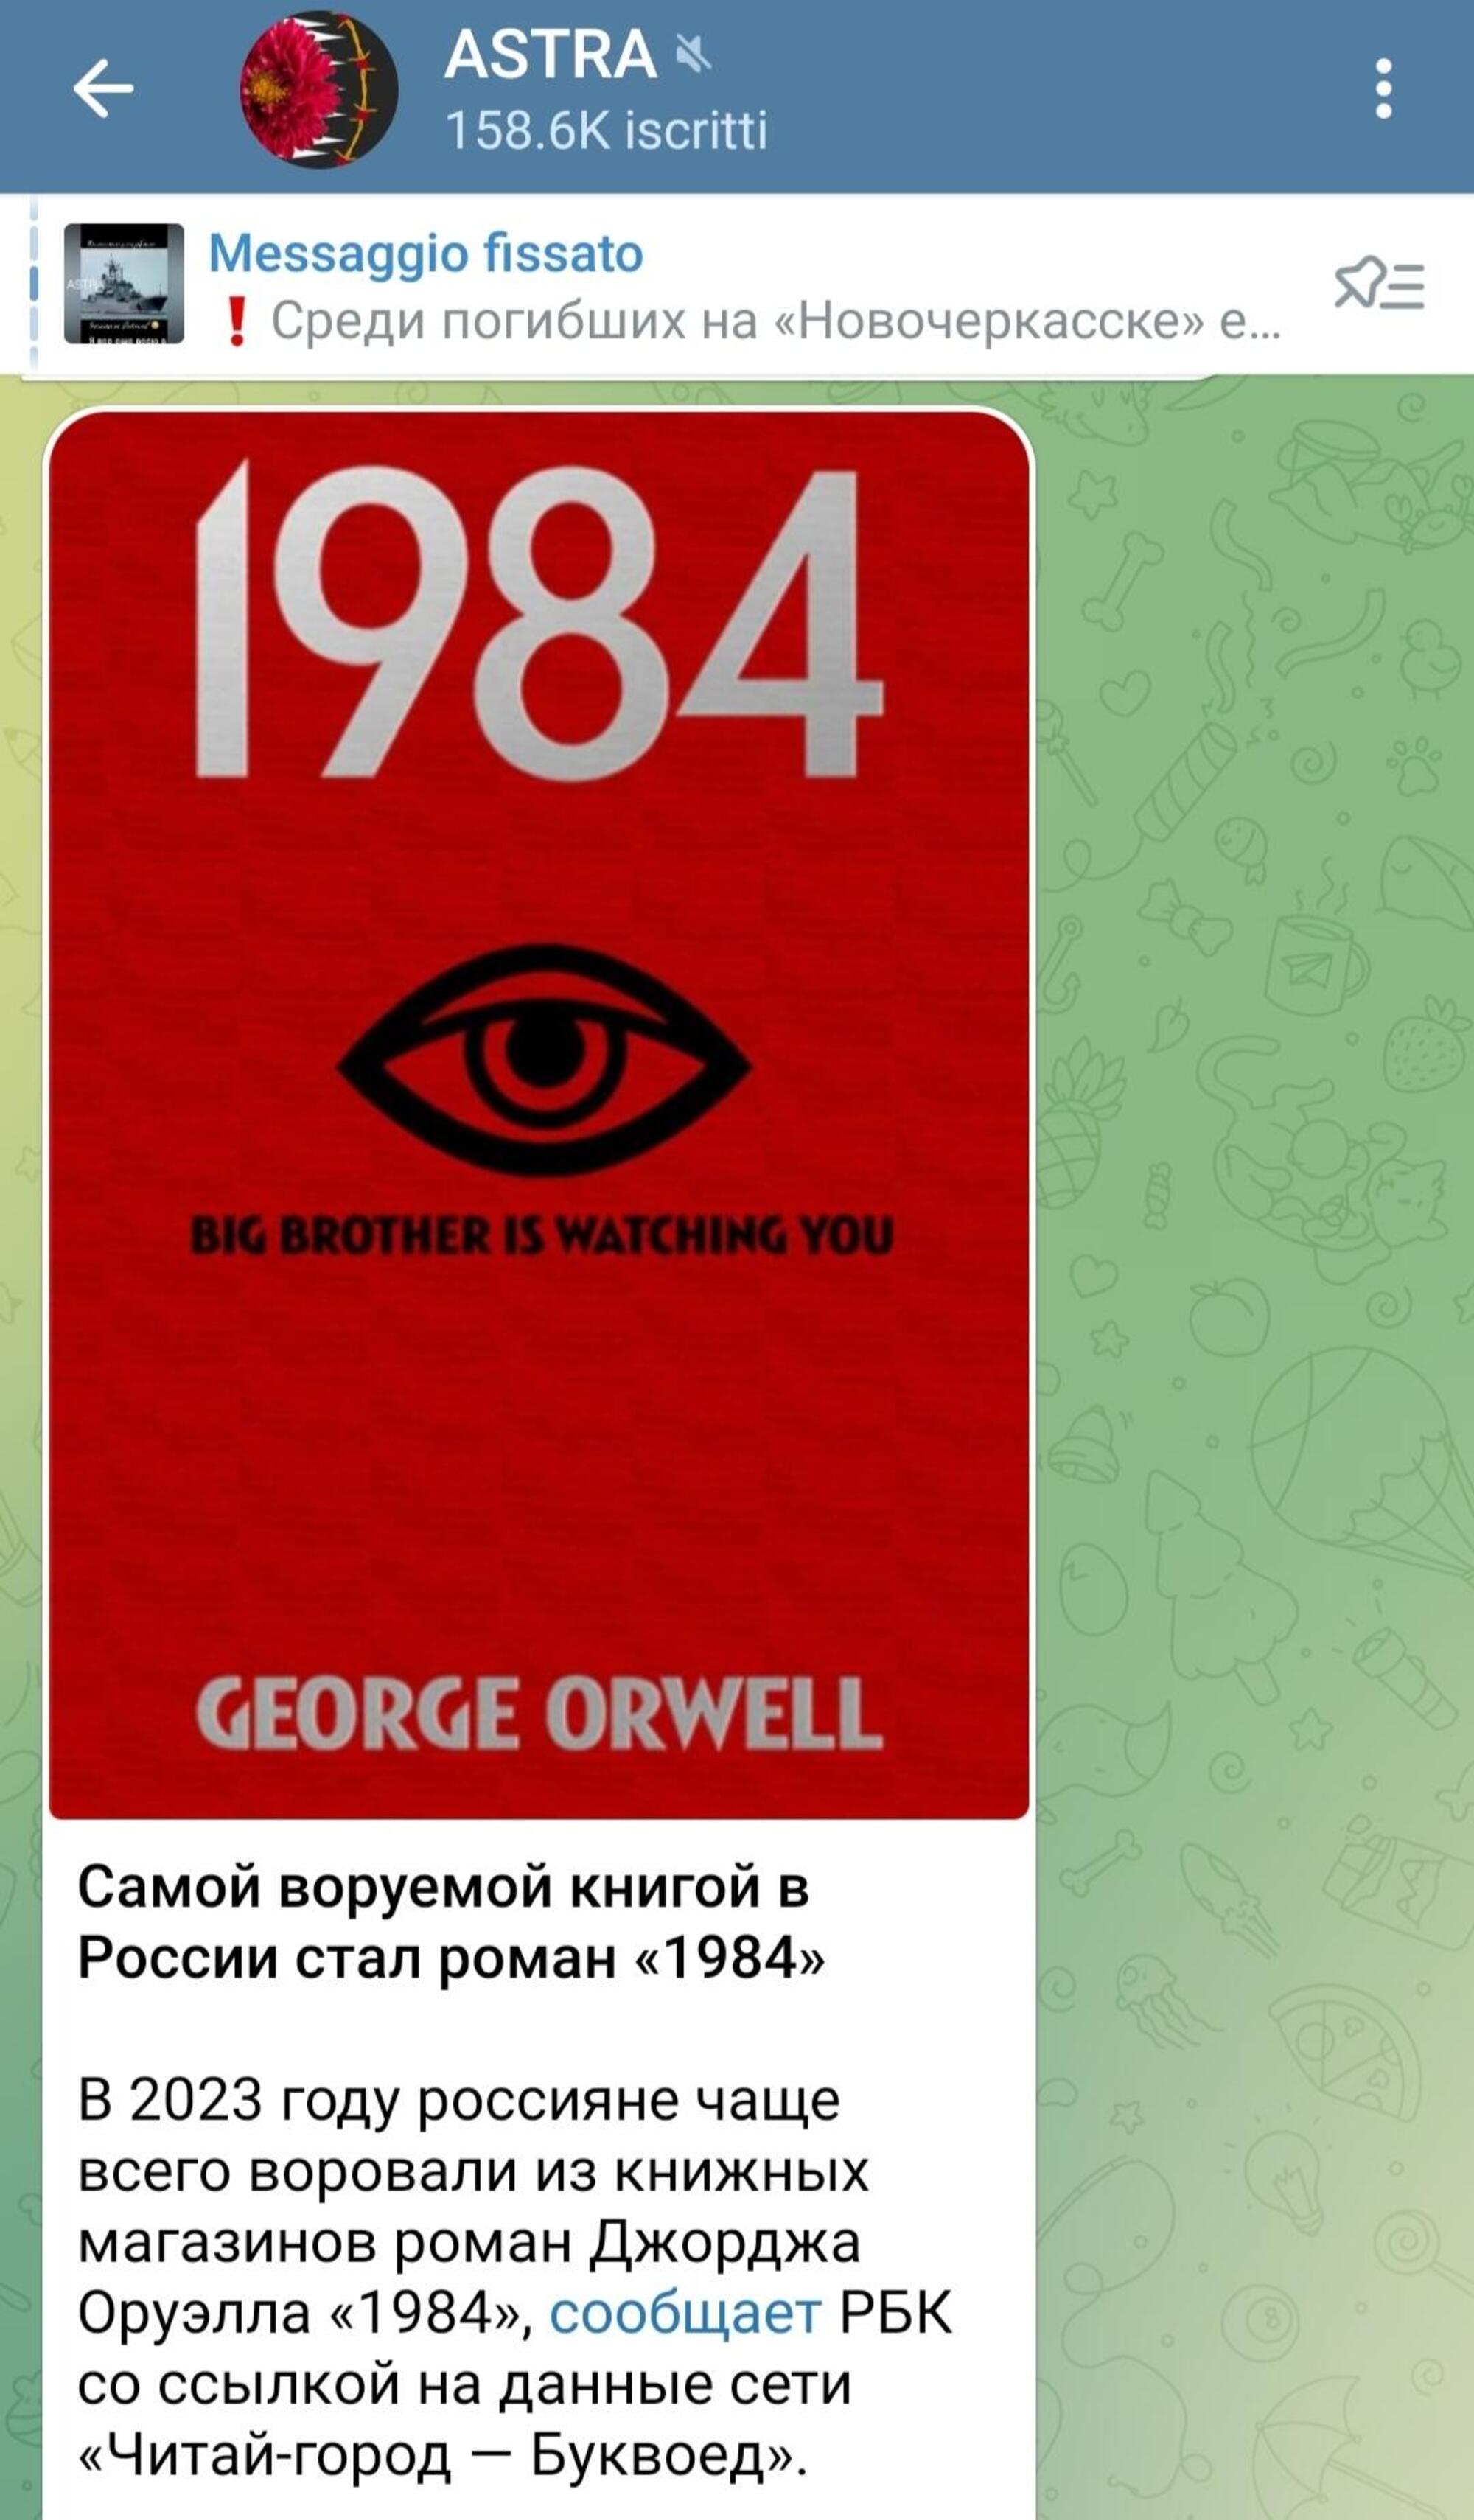 1984 George Orwell in Russia